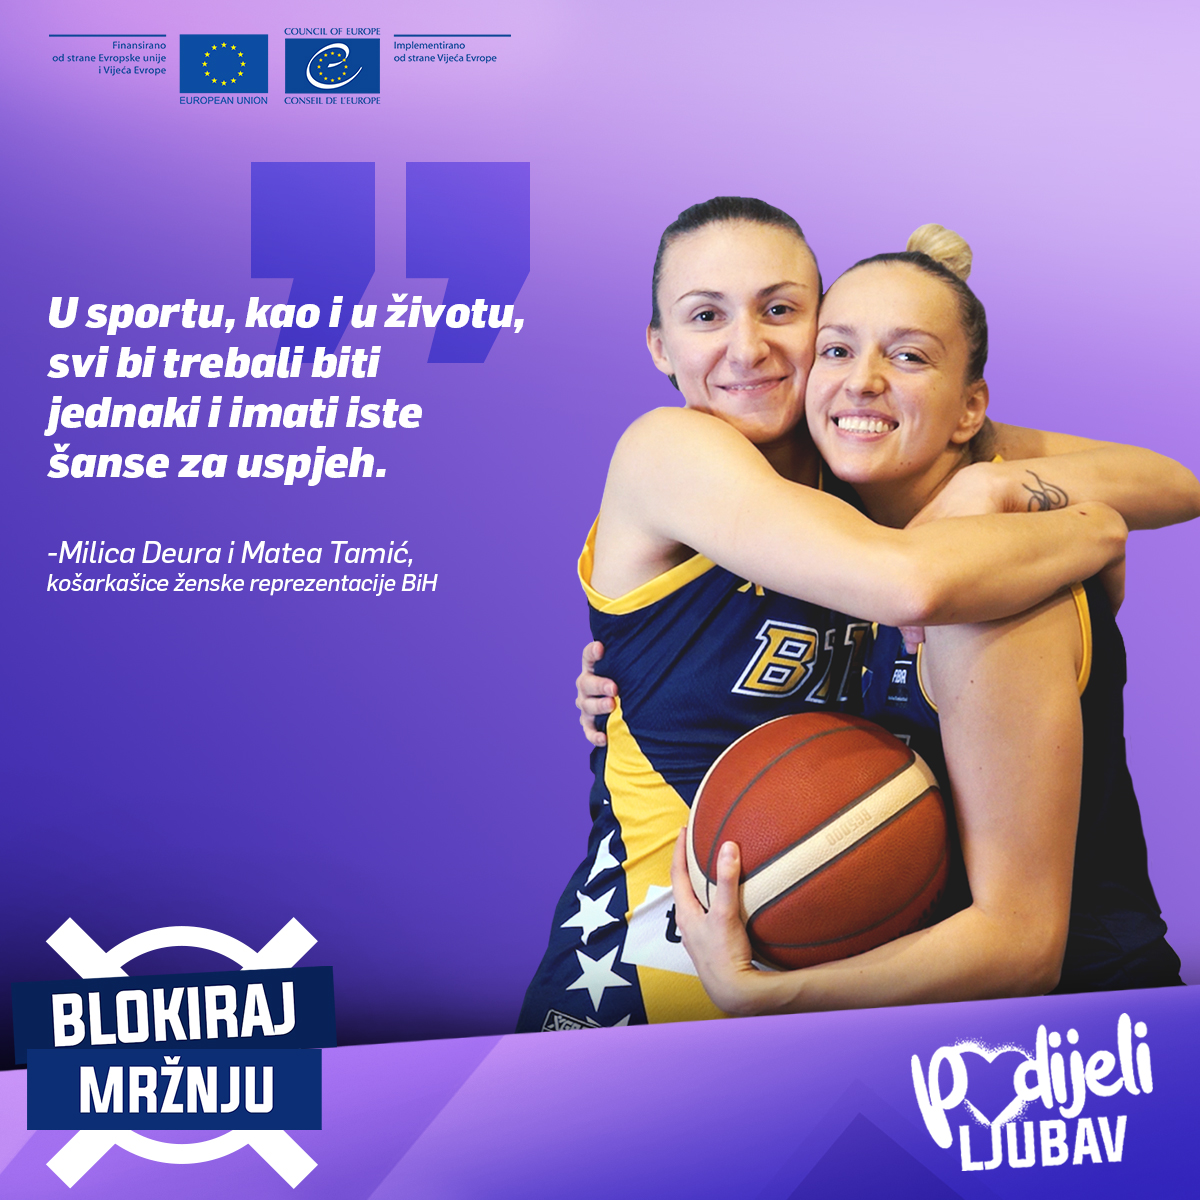 Milica Deura and Matea Tavic, basketball players